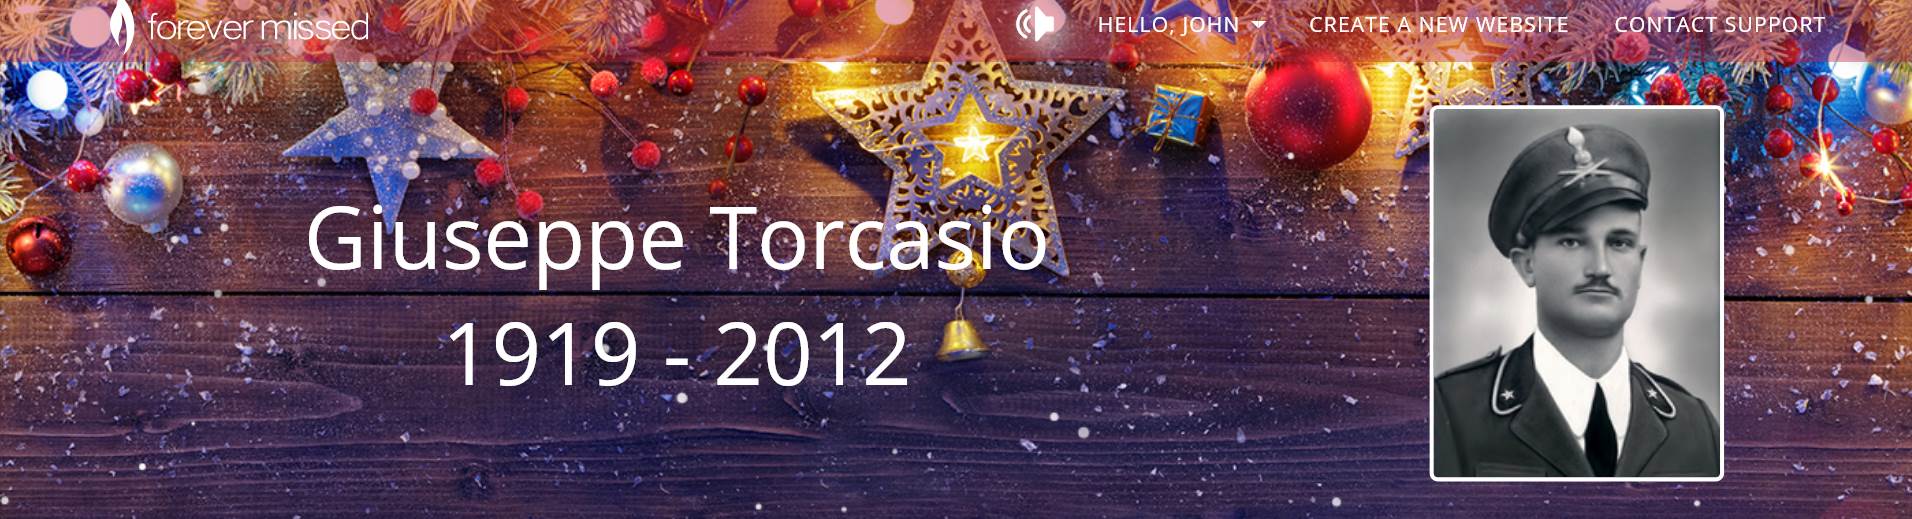 Giuseppe Torcasio: Forever, Christmas 2021 Giuseppe Torcasio: Forever, Christmas 2021 by johntorcasio